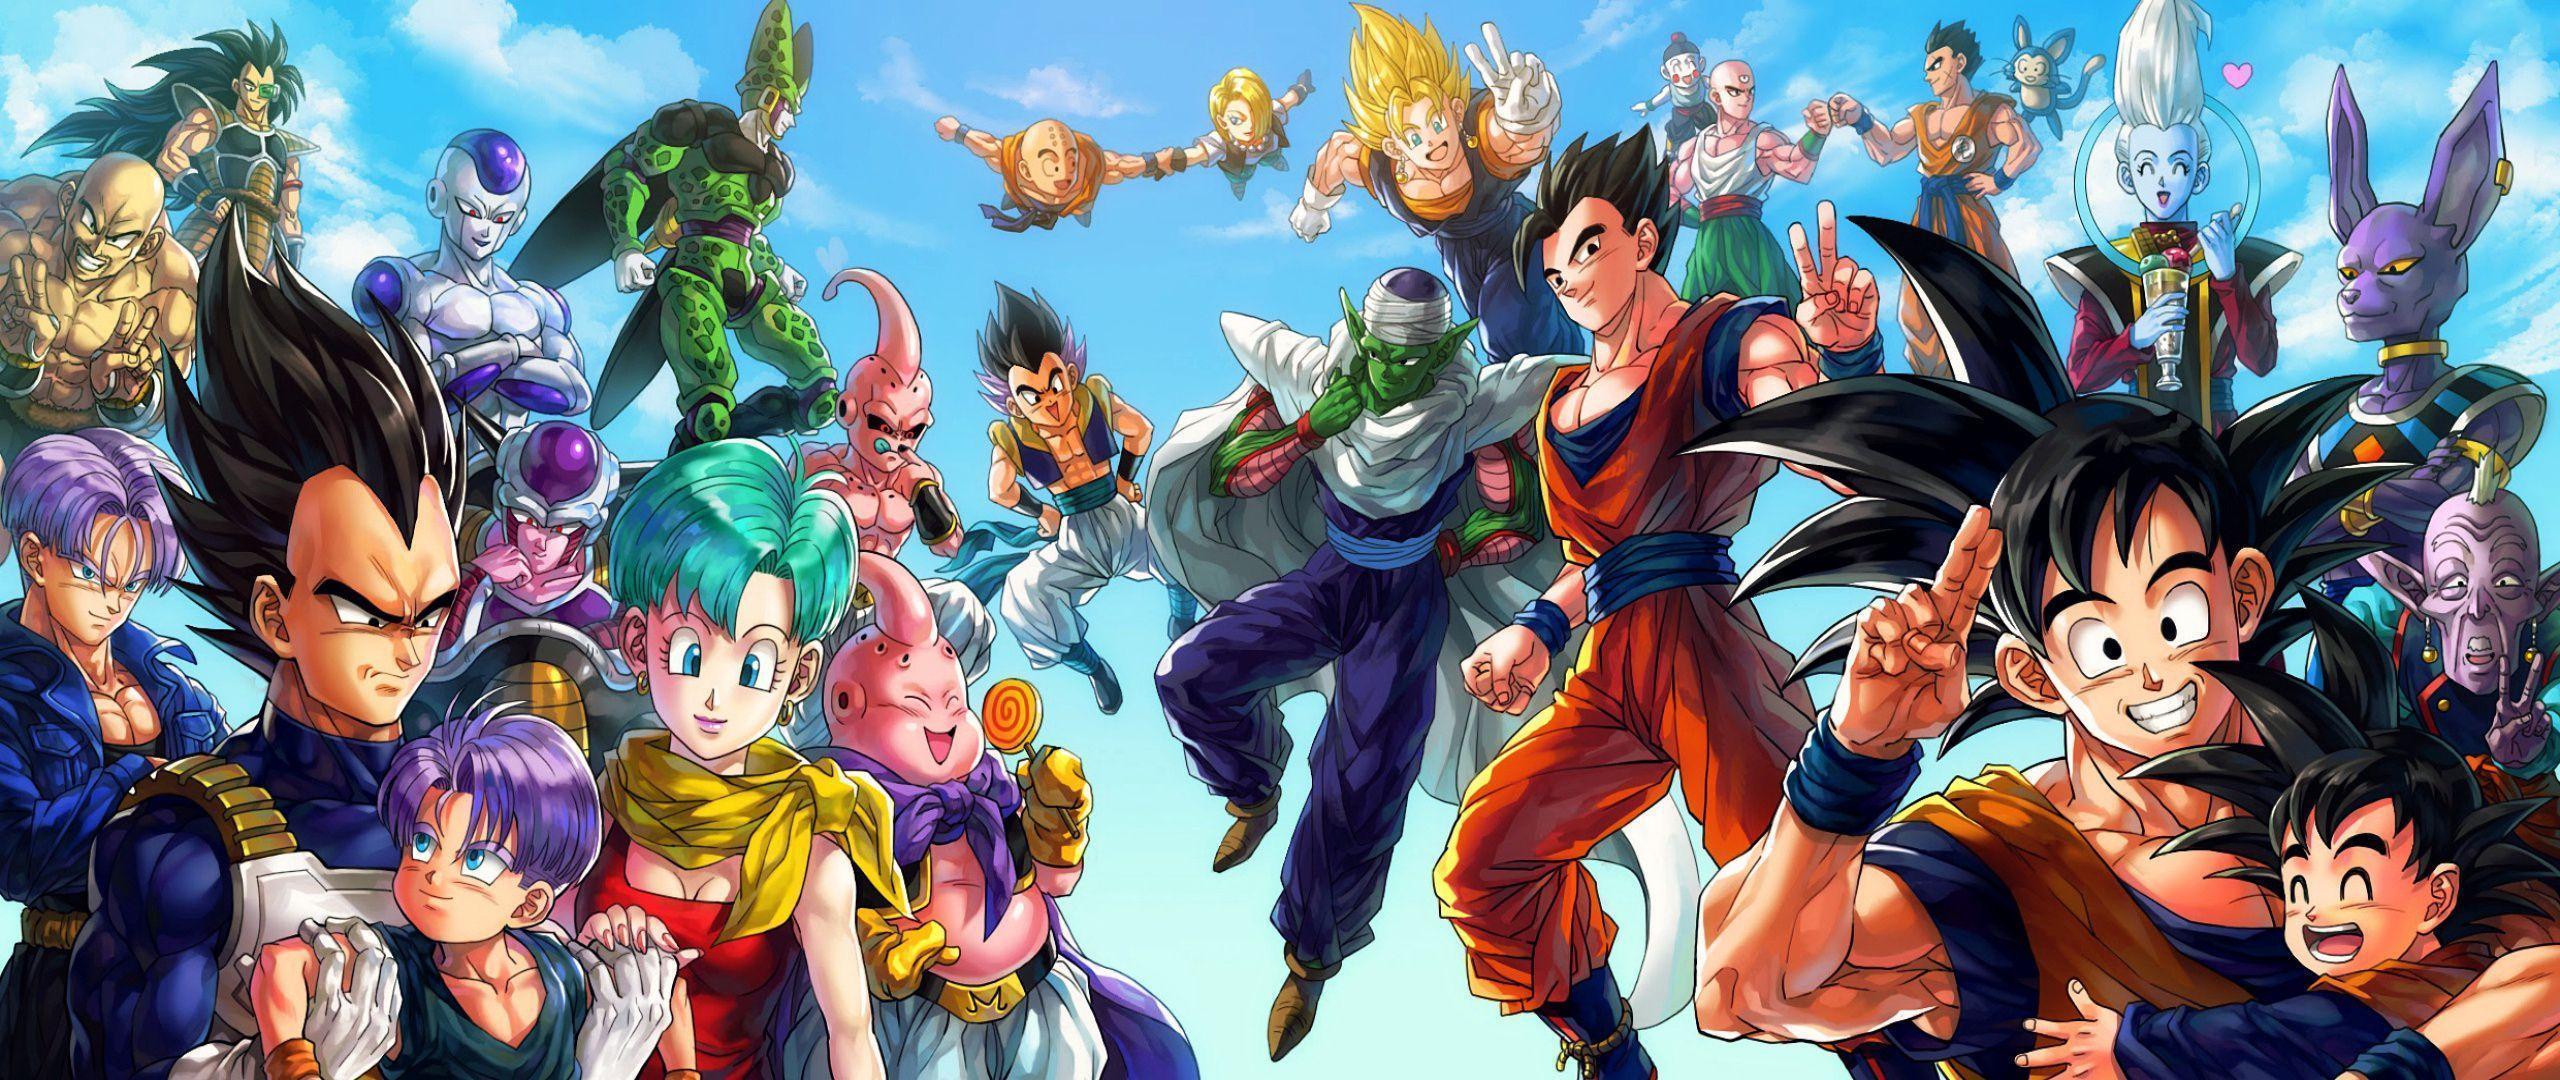 Dragon Ball, Goku, Gohan, Piccolo, Majin Buu, Bulma, Vegeta, Frieza, Cell and Android 18